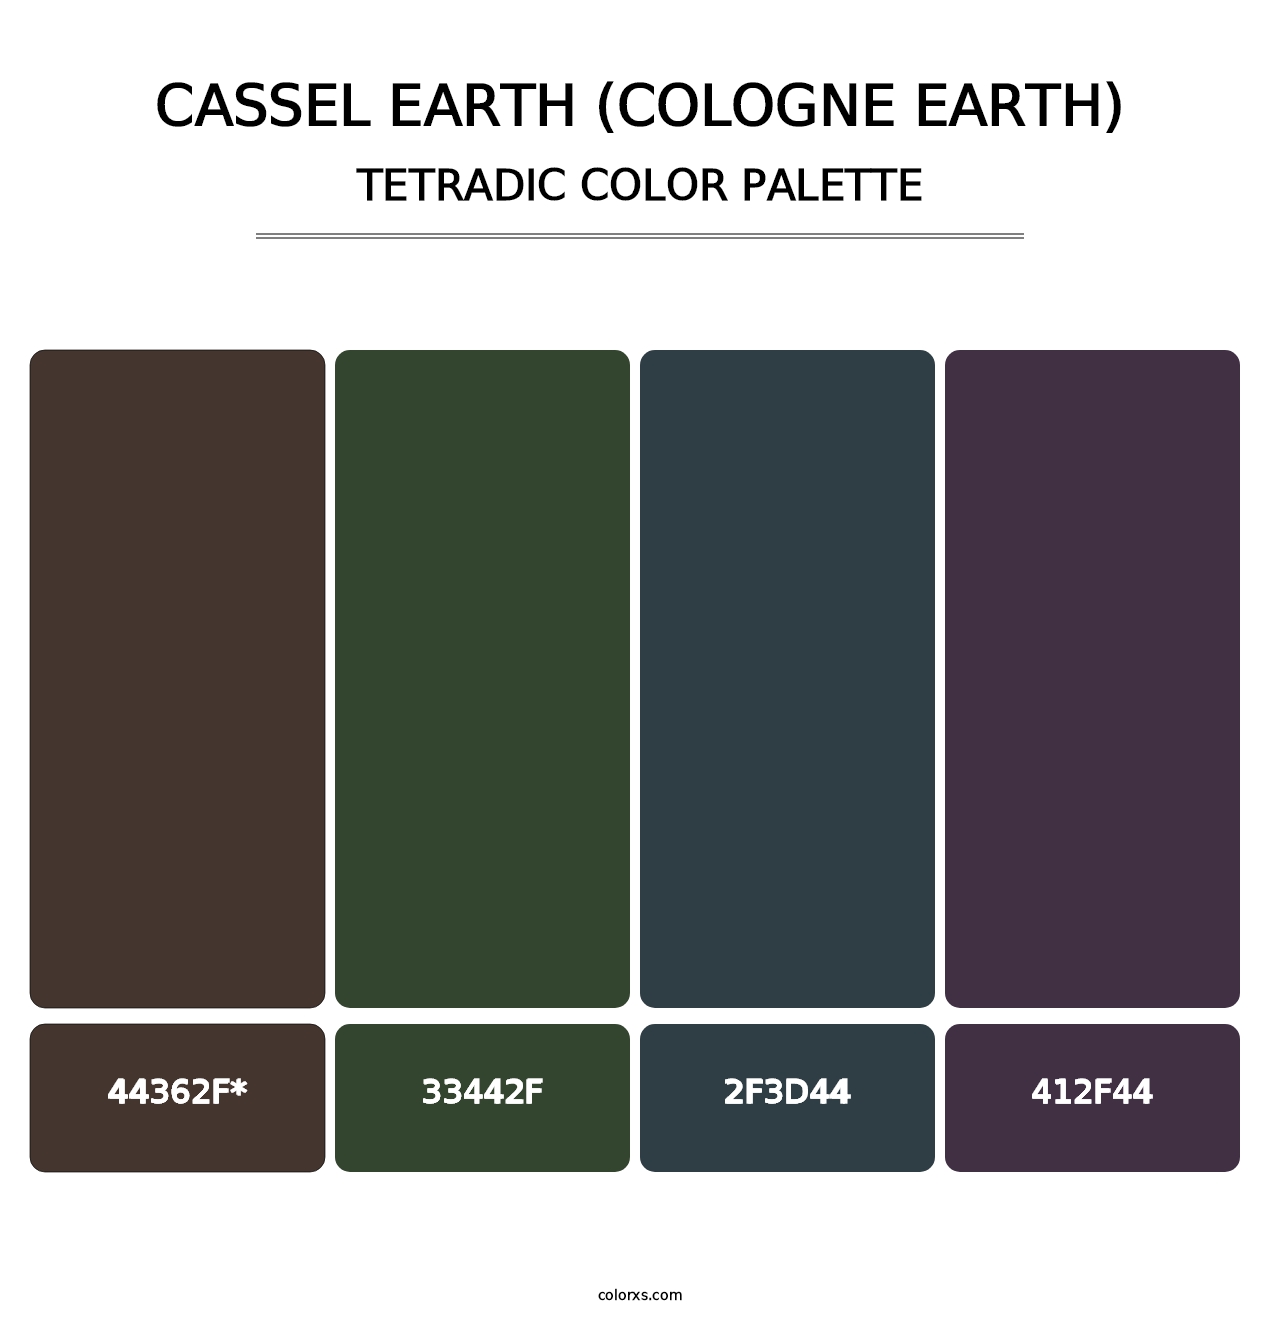 Cassel Earth (Cologne Earth) - Tetradic Color Palette